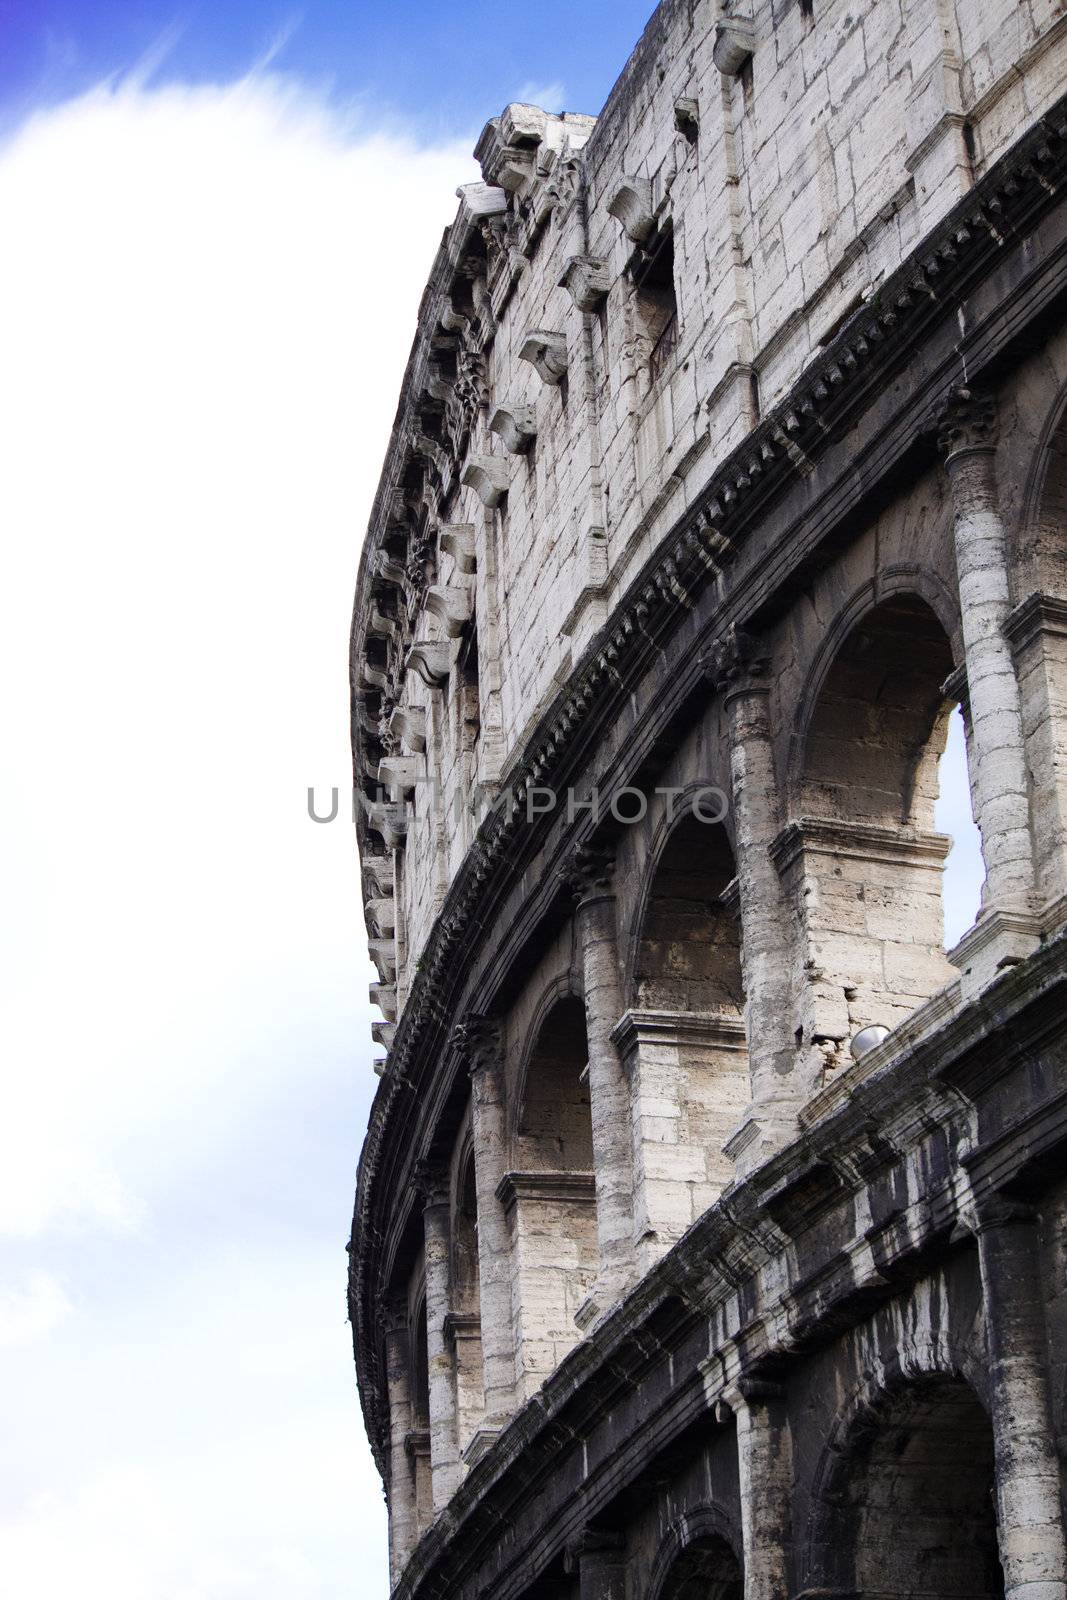 Rome Colosseum by FedericoPhoto